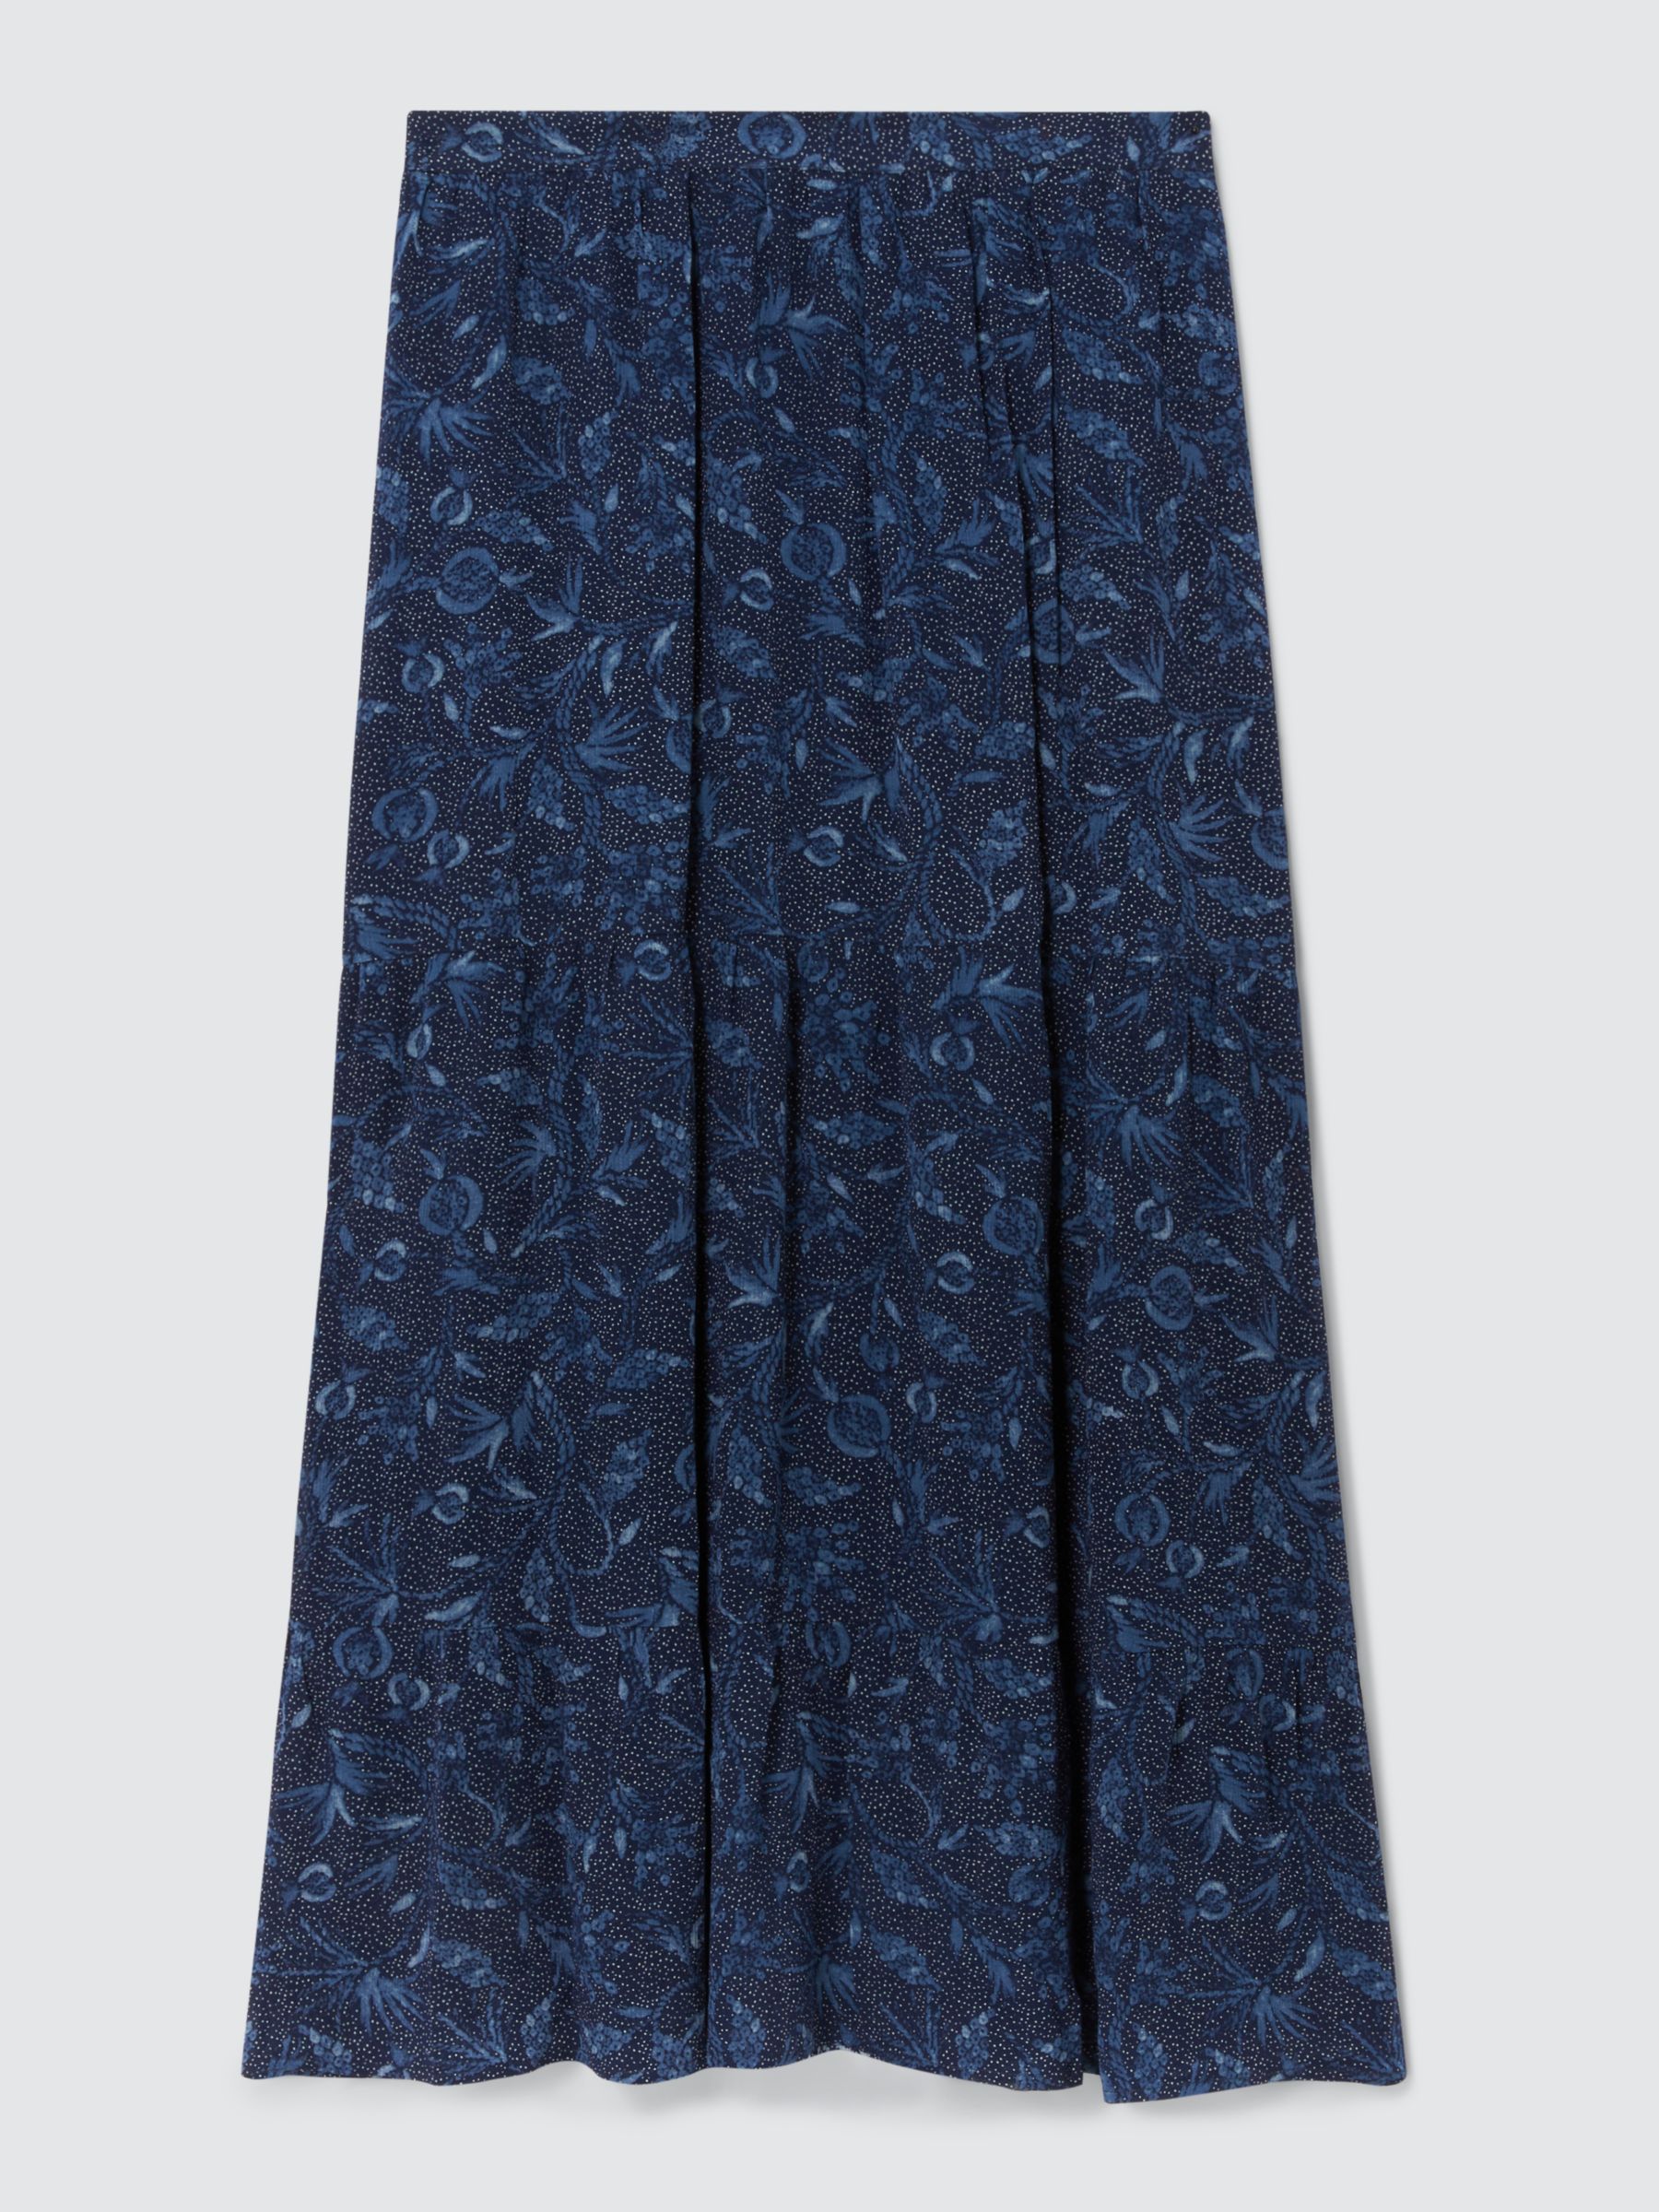 AND/OR Shibori Francesca Tiered Floral Midi Skirt, Blue, 12